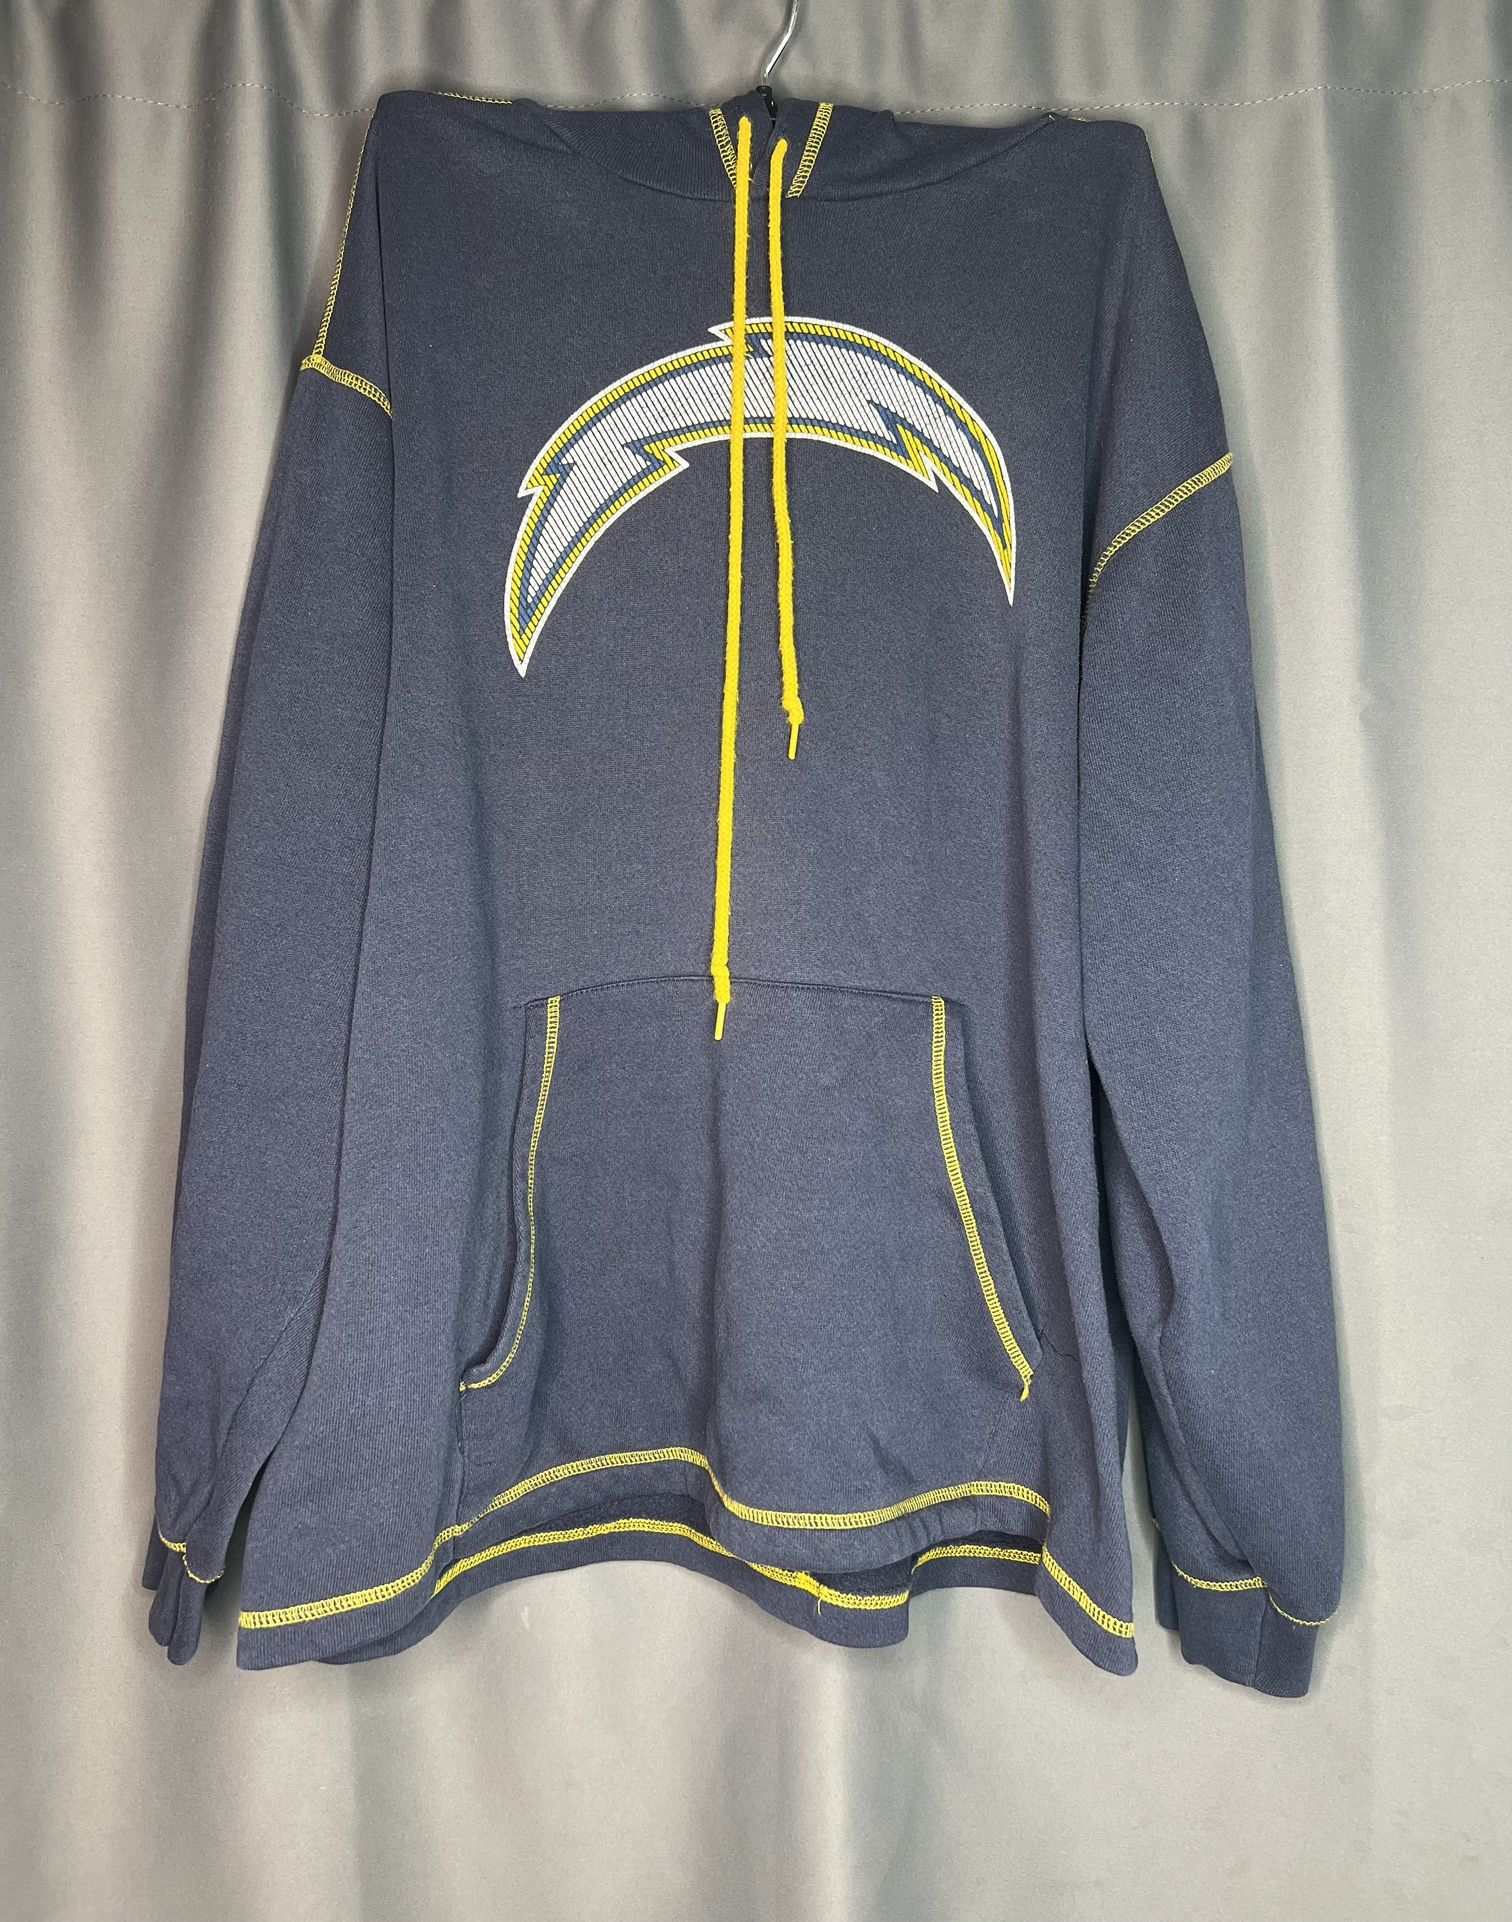 NFL Chargers Sweatshirt - Size Large